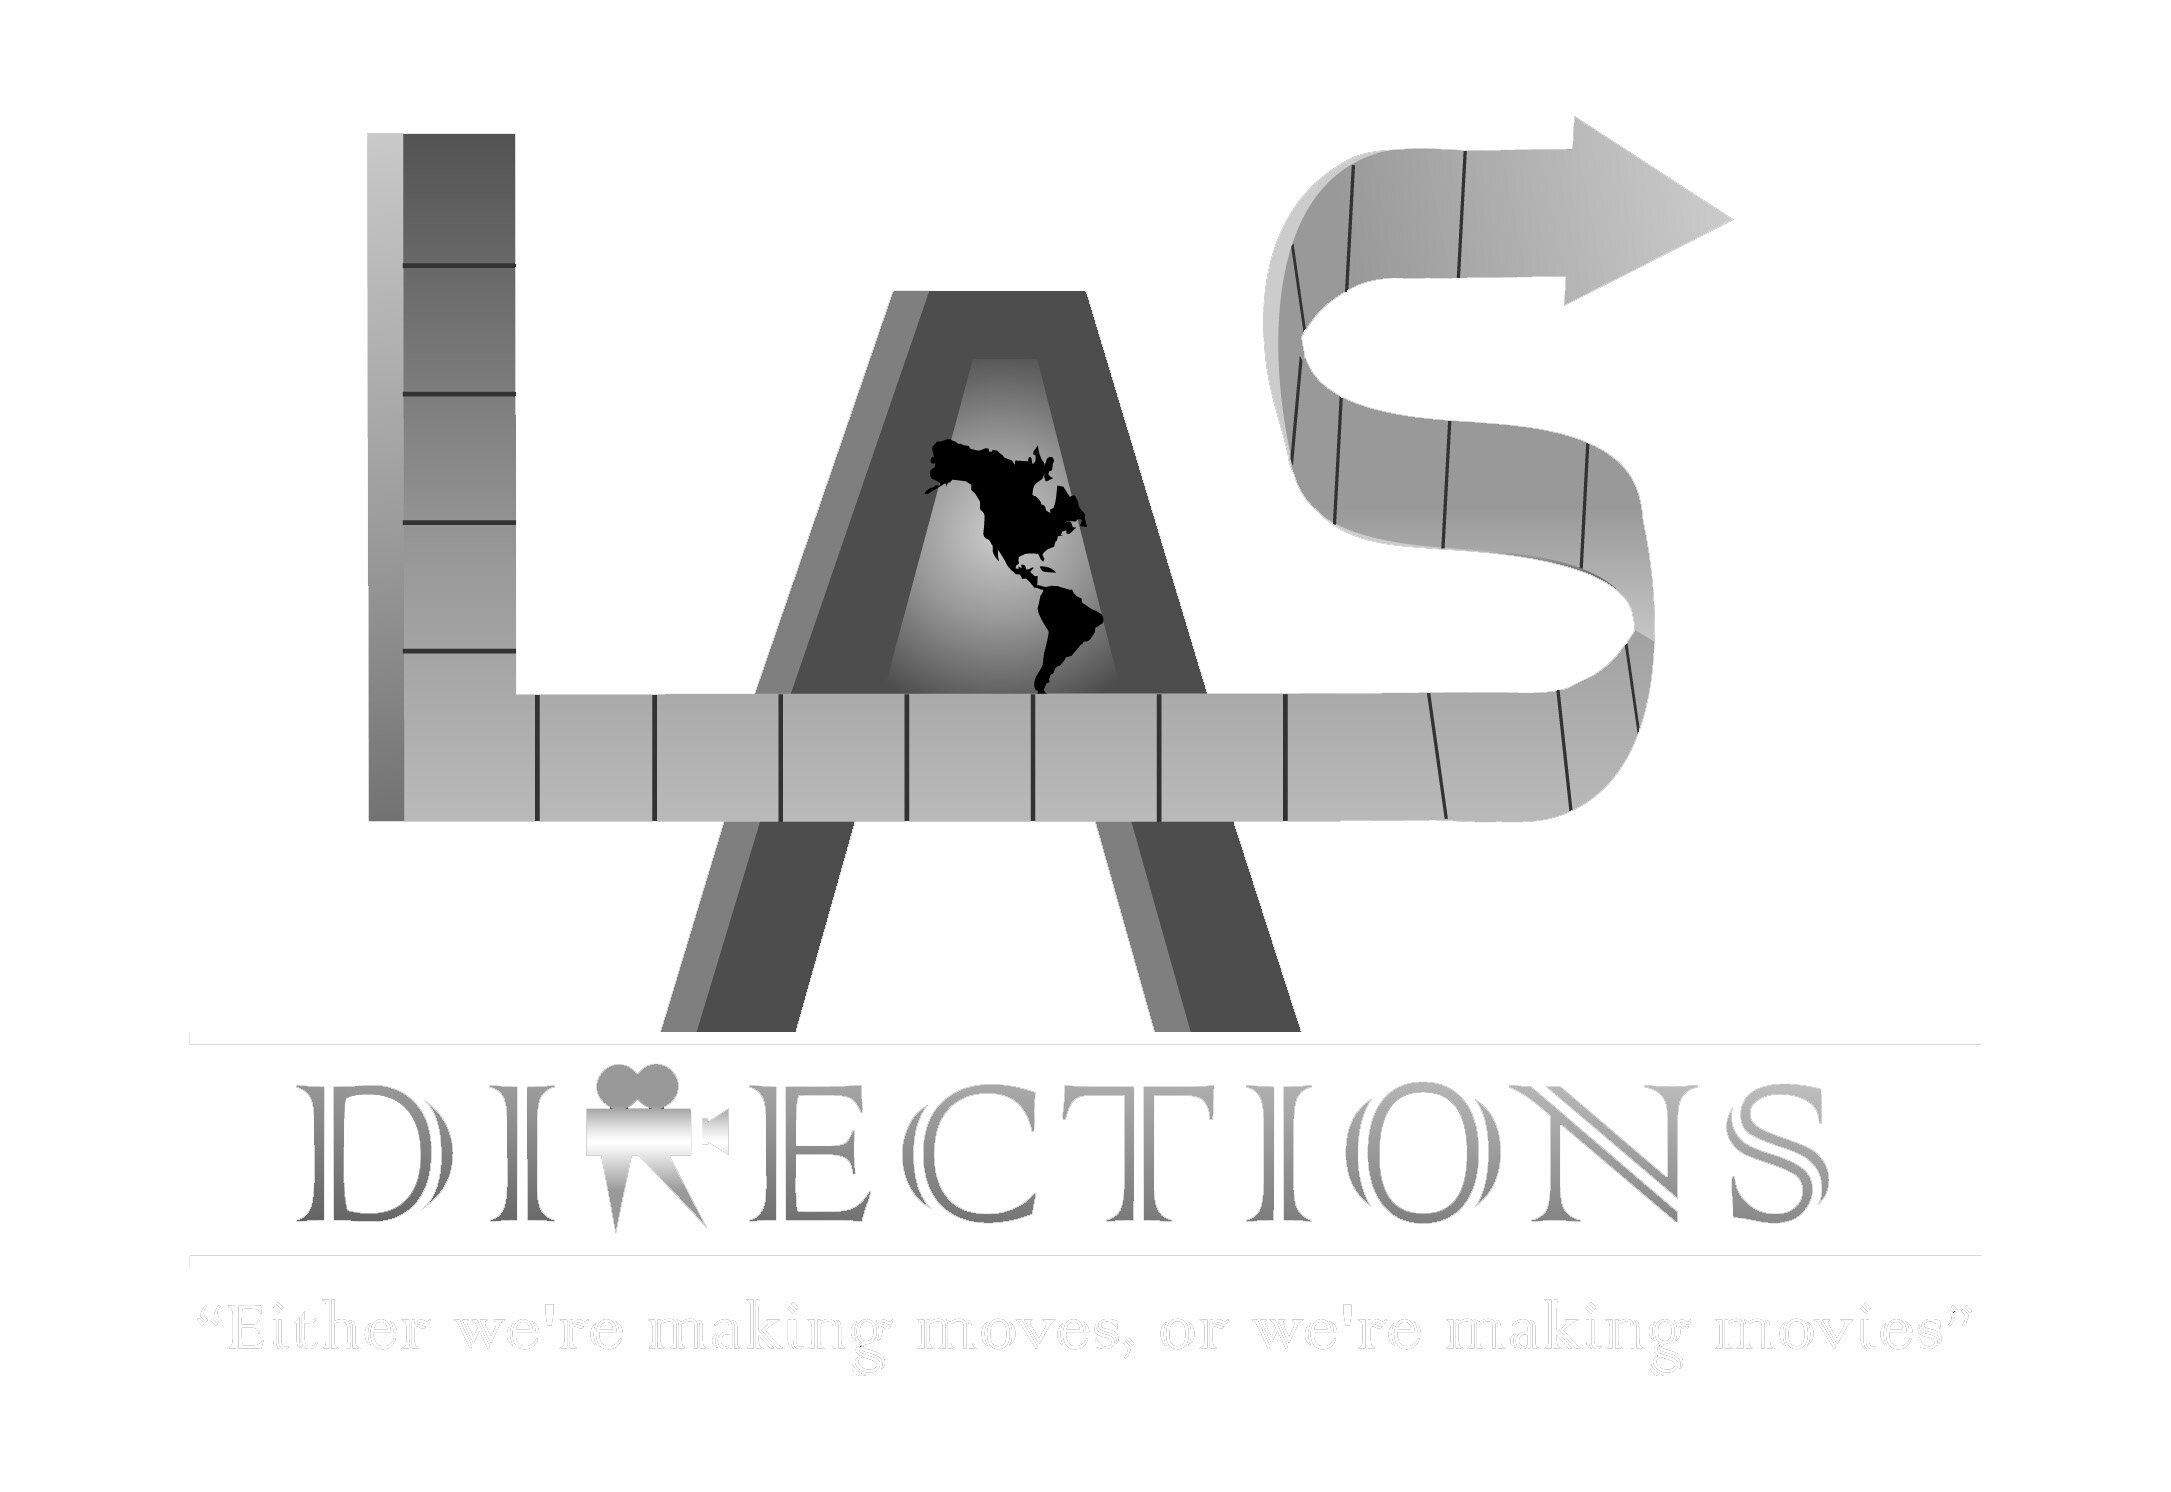 LAS Directions, LLC